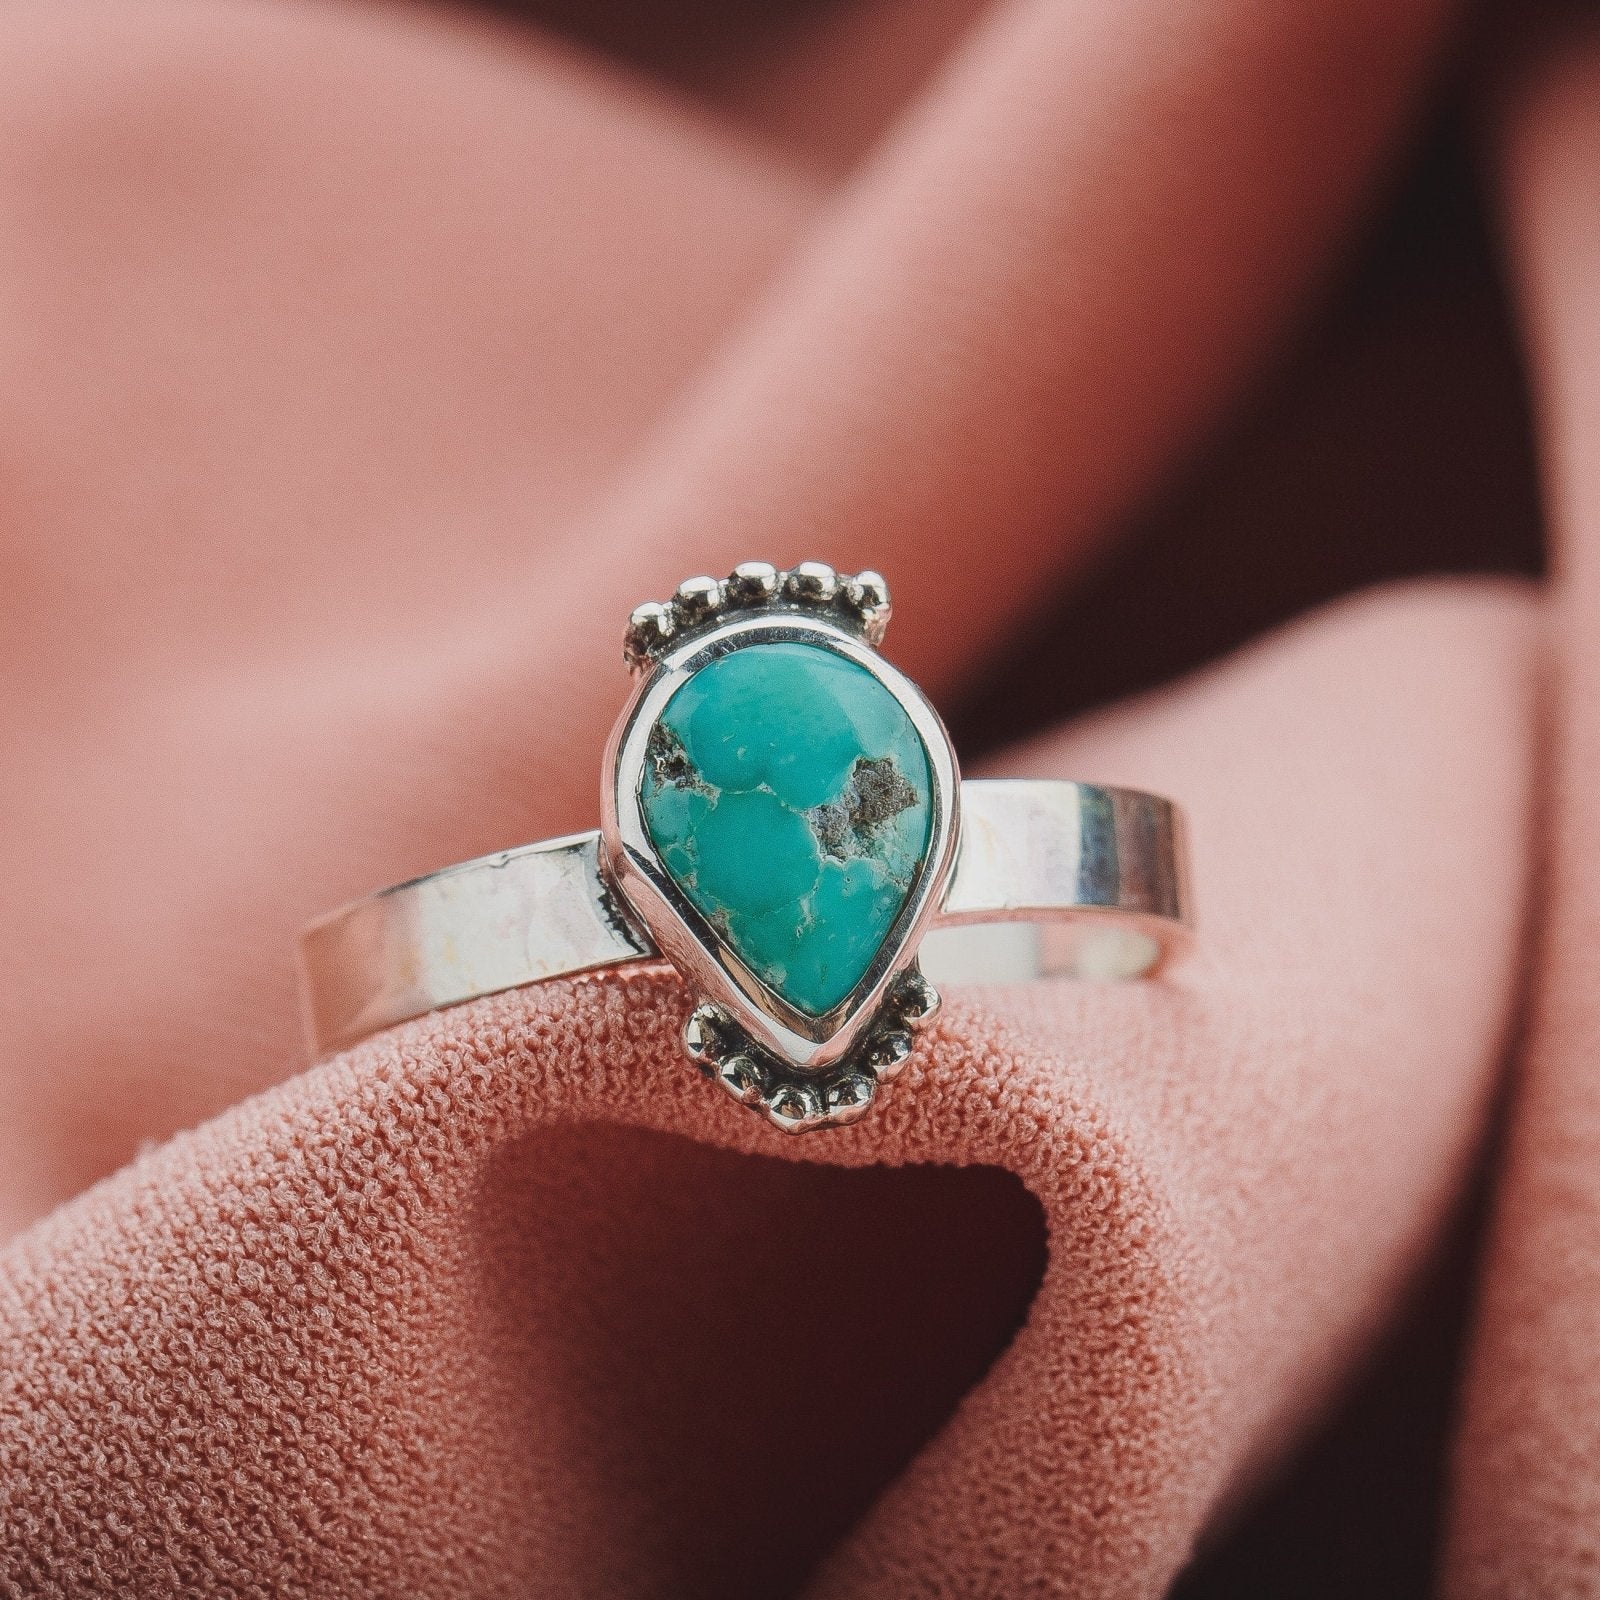 Size 7.25 White Water Turquoise Gemstone Ring - Melanie Golden Jewelry - gemstone rings, rings